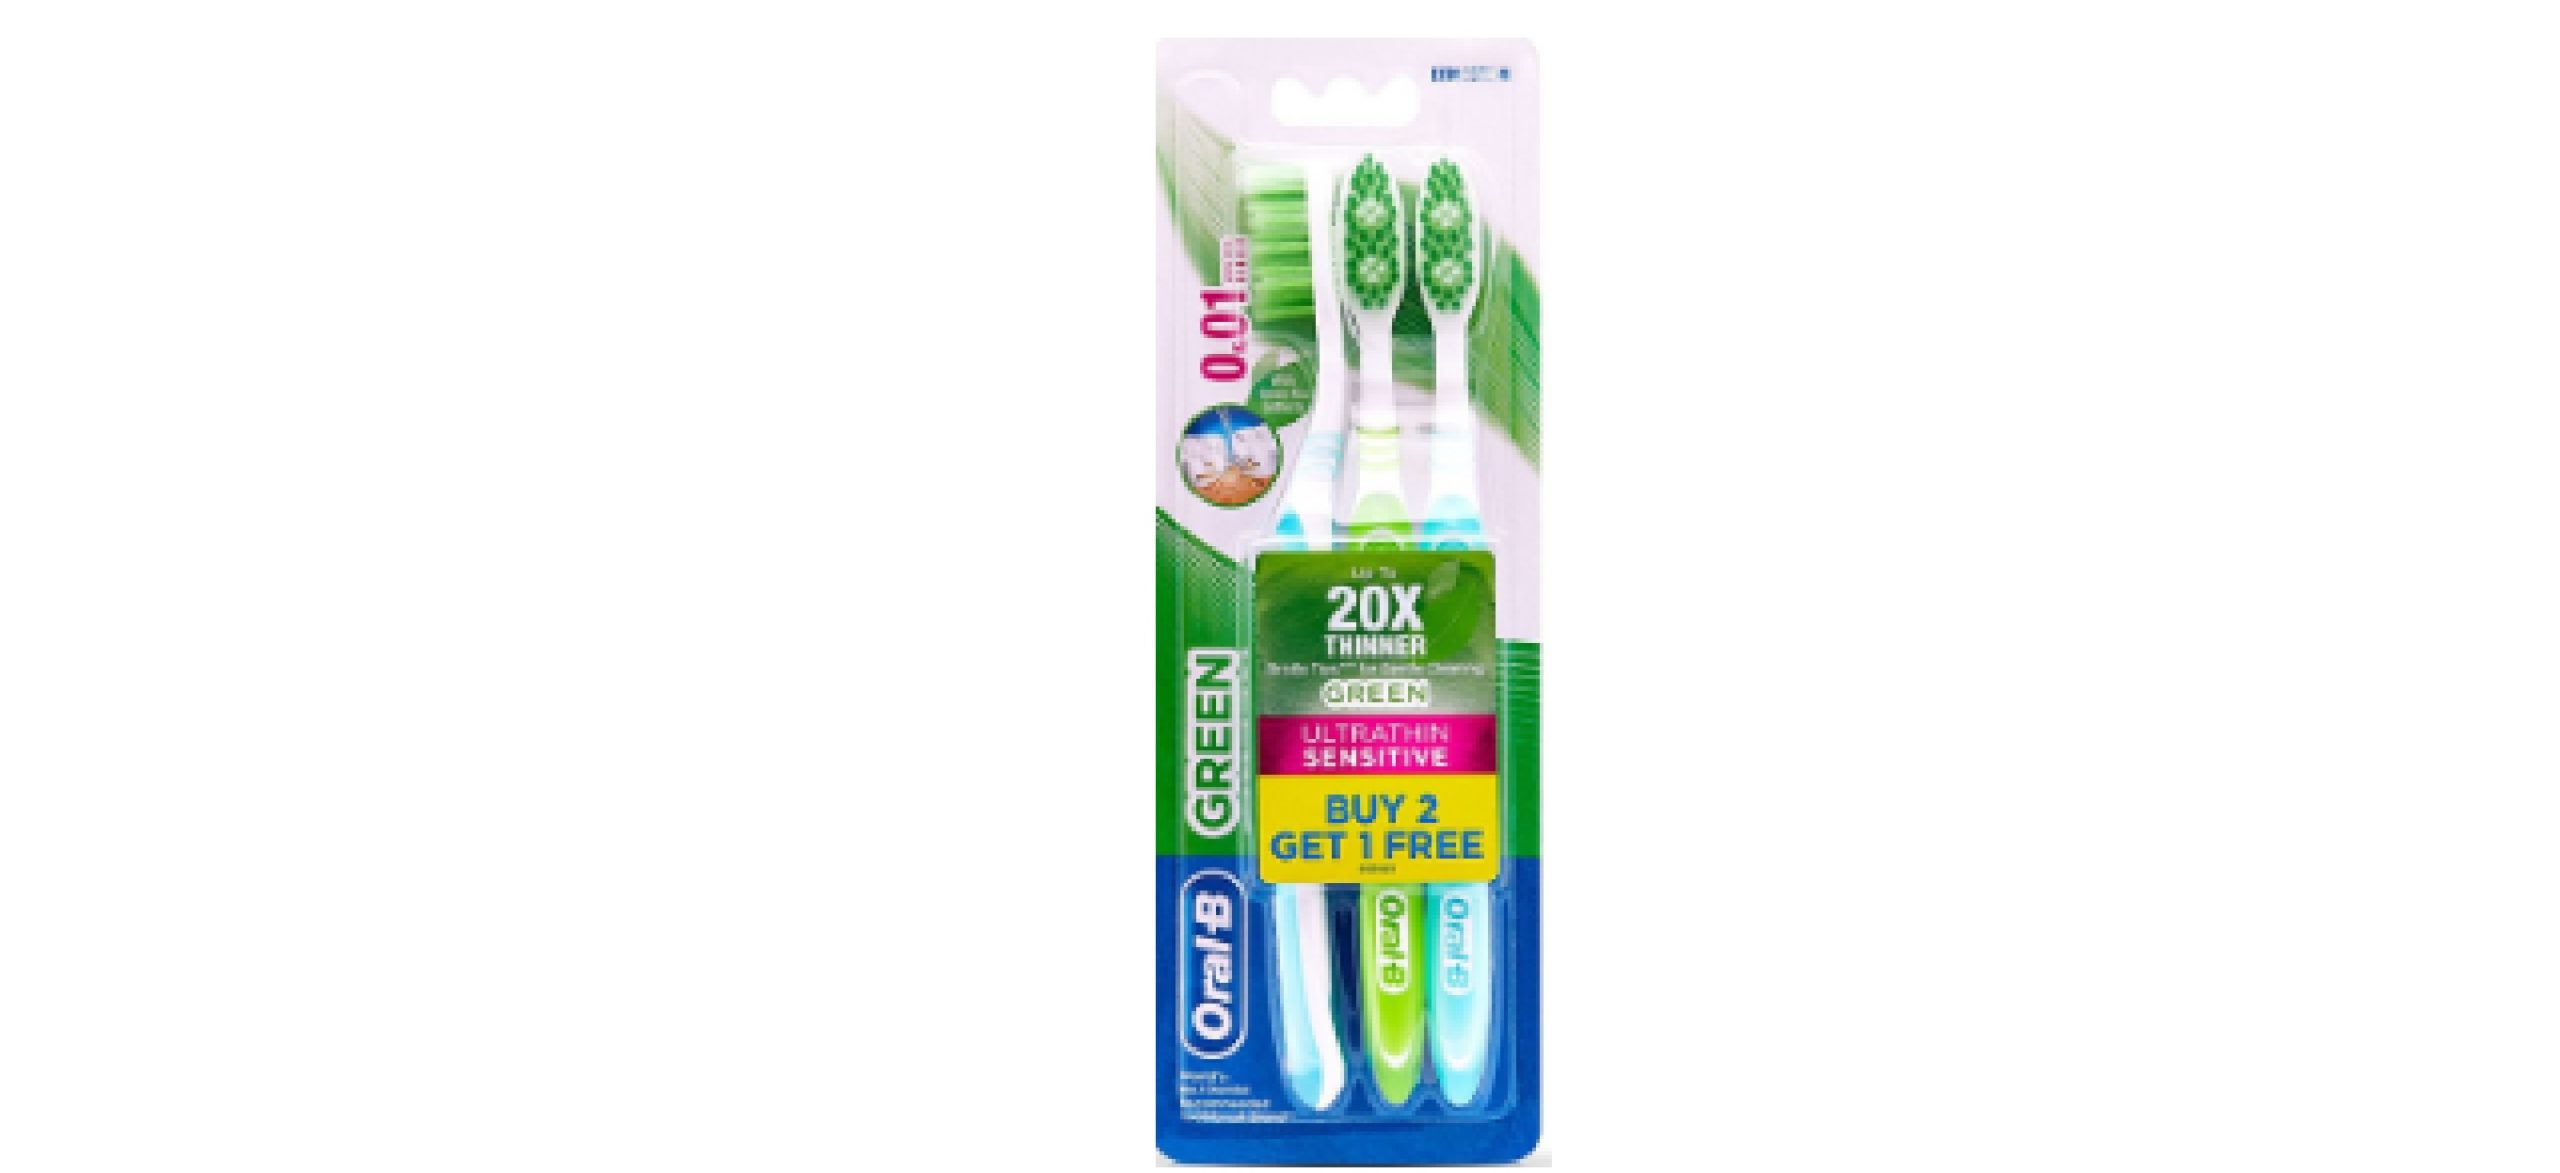 Ultrathin Green Sensitive Buy 2 get 2 Free (oralB) Tooth Brush